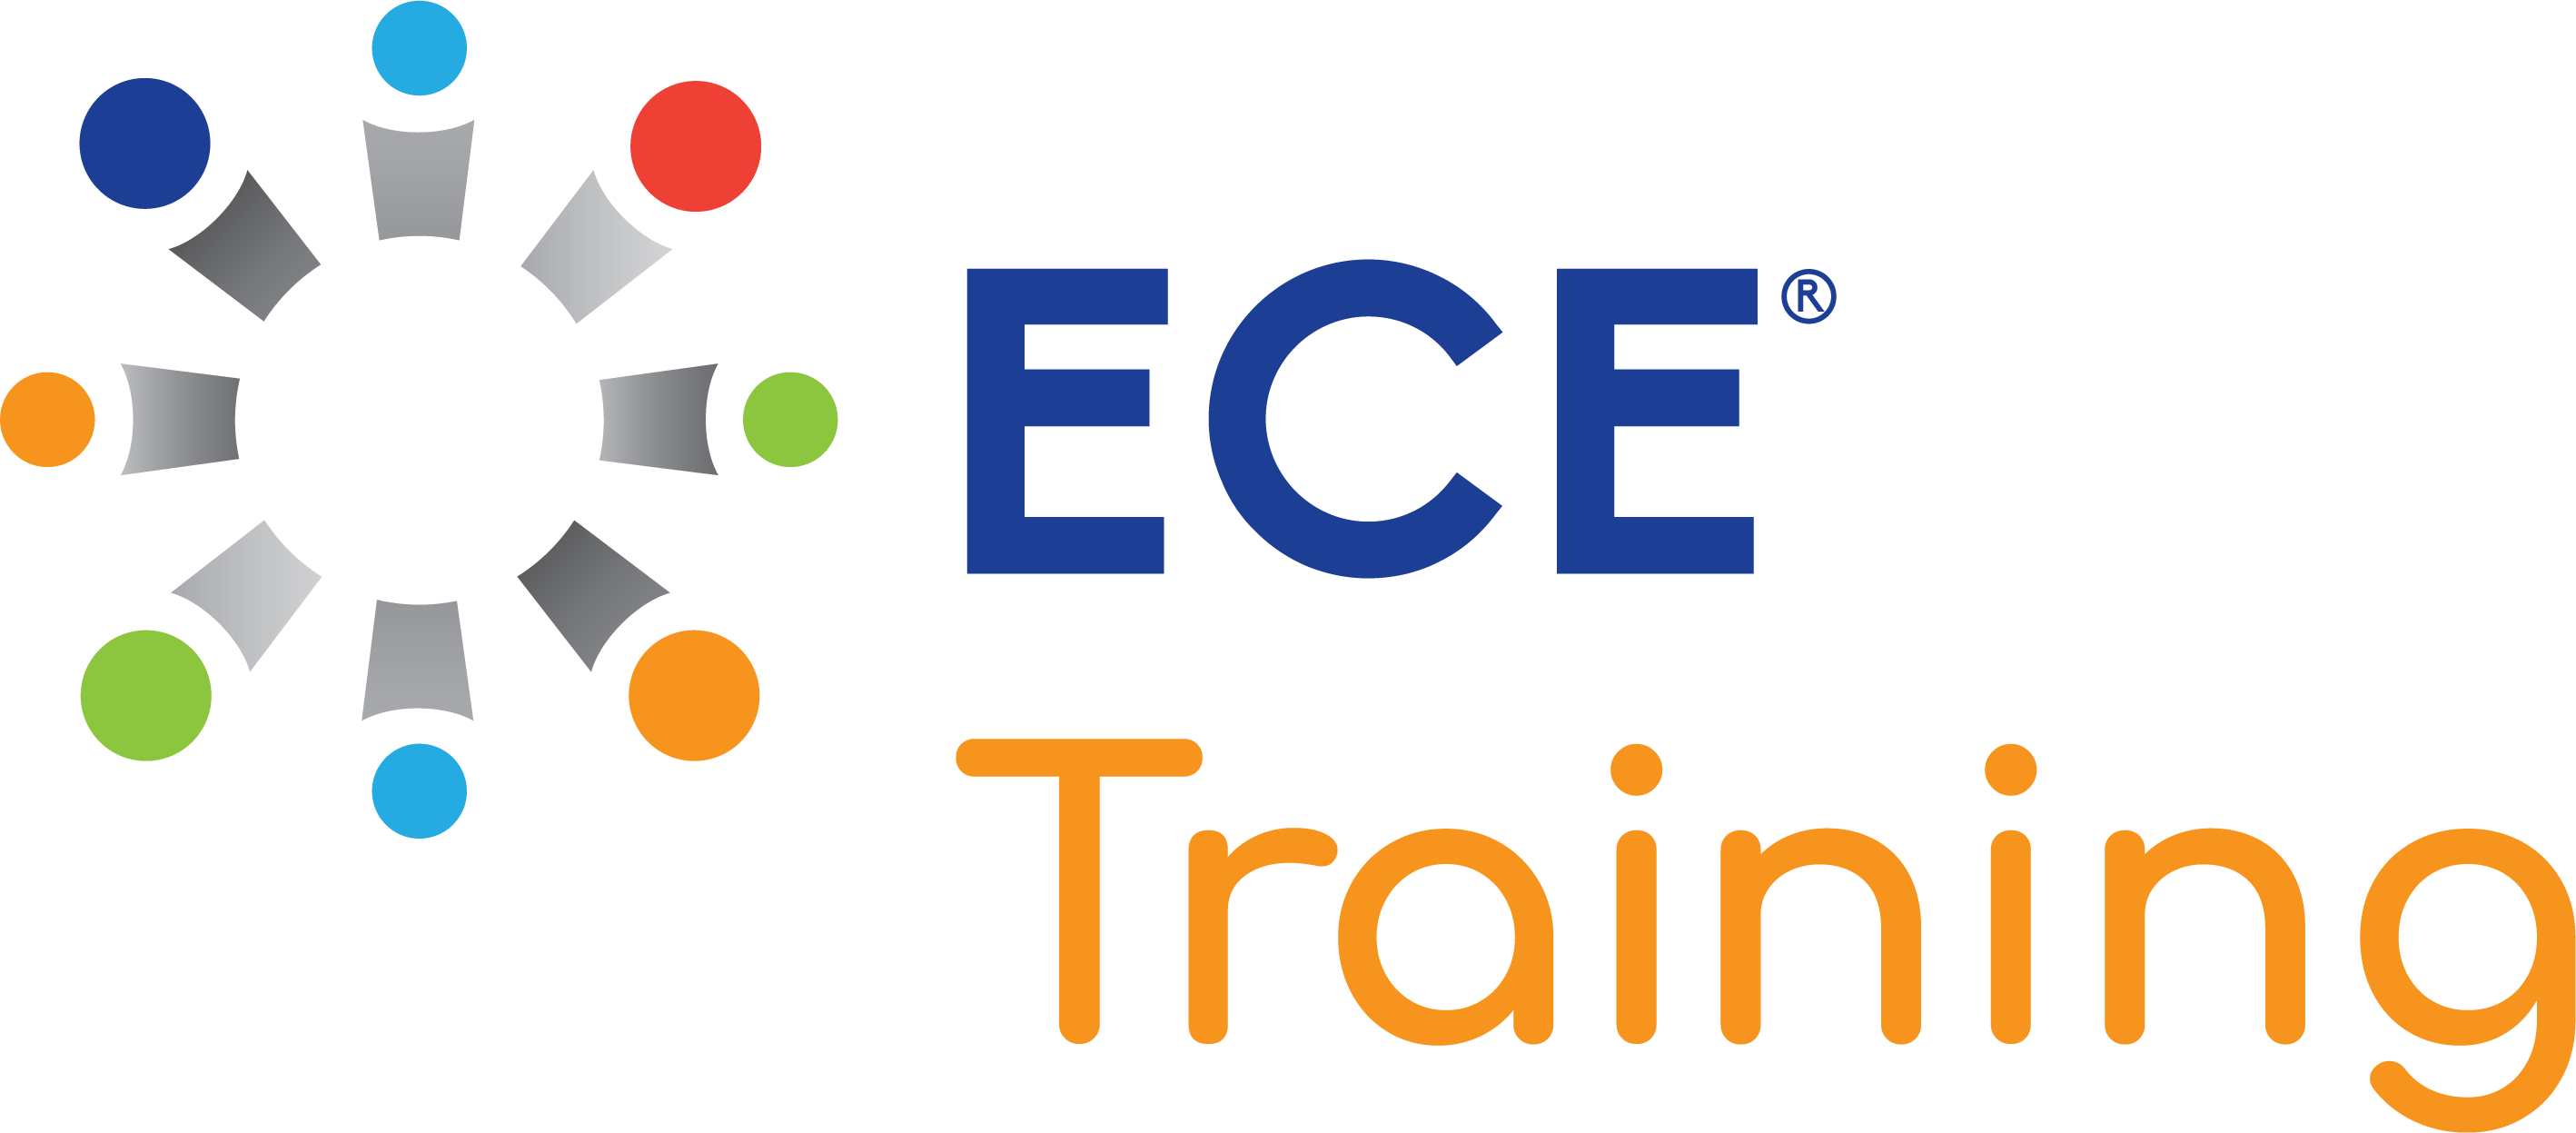 ECE Training